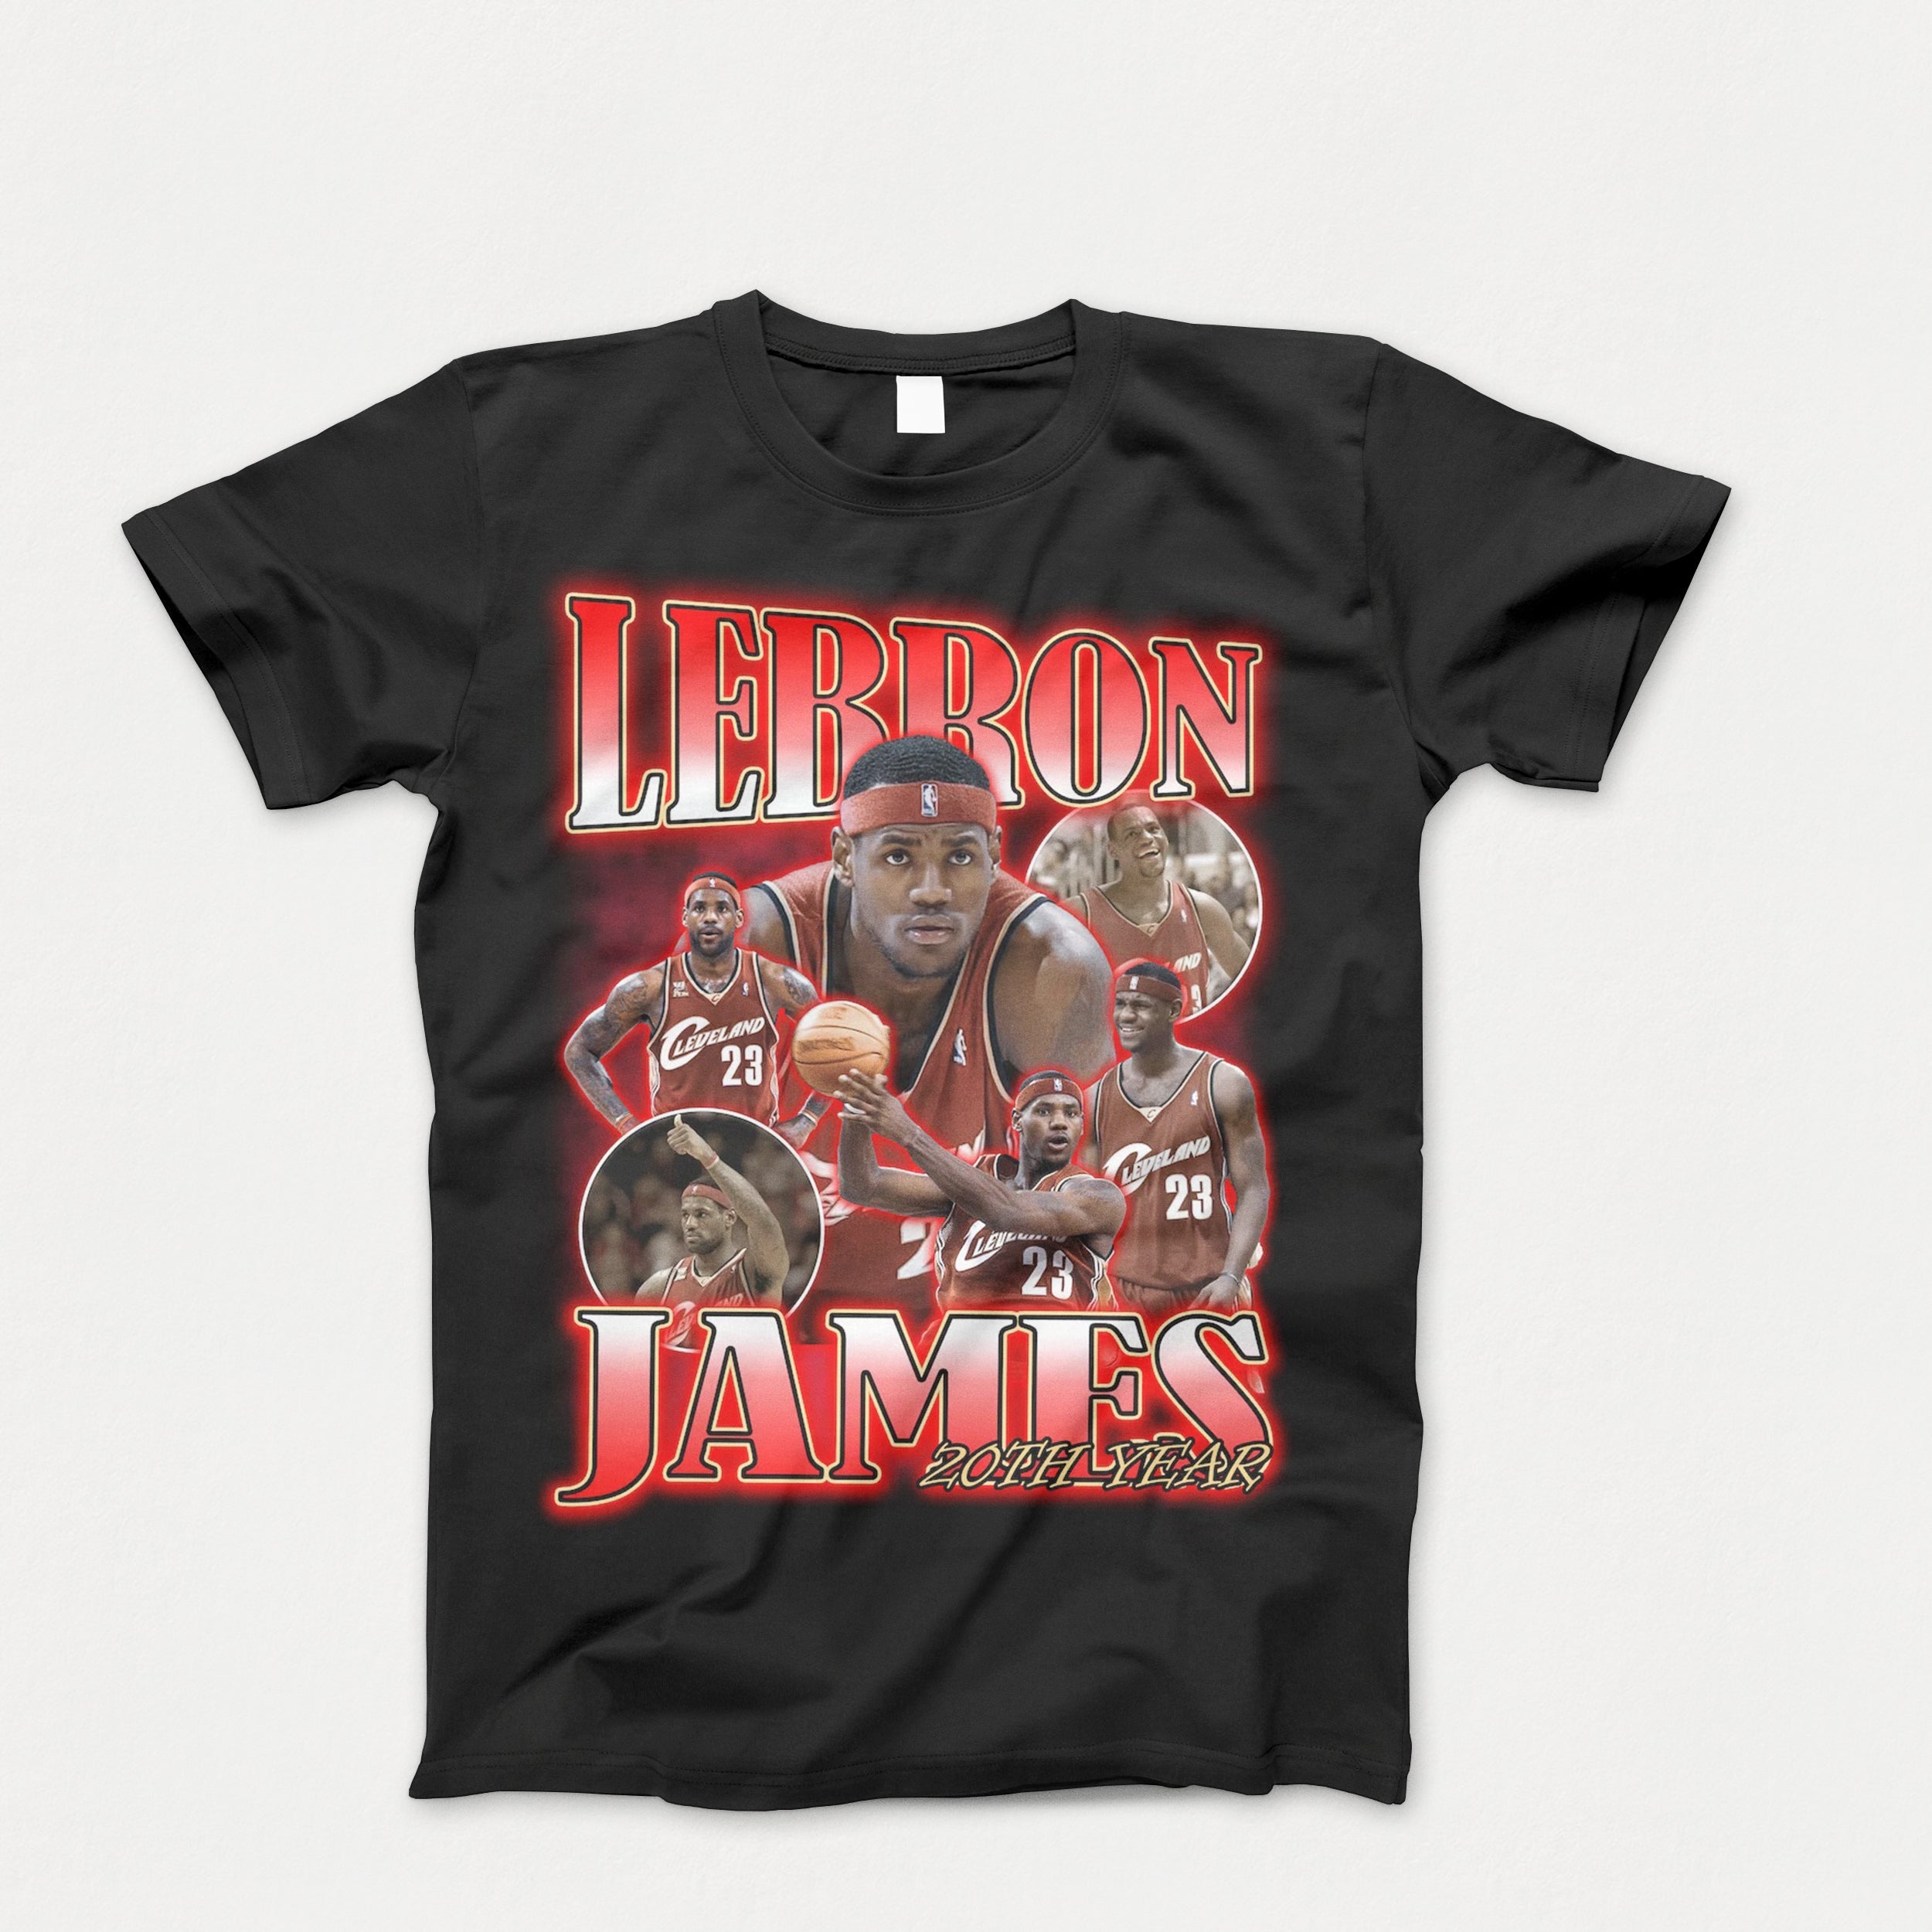 Unisex Adult Lebron James Tee Shirt